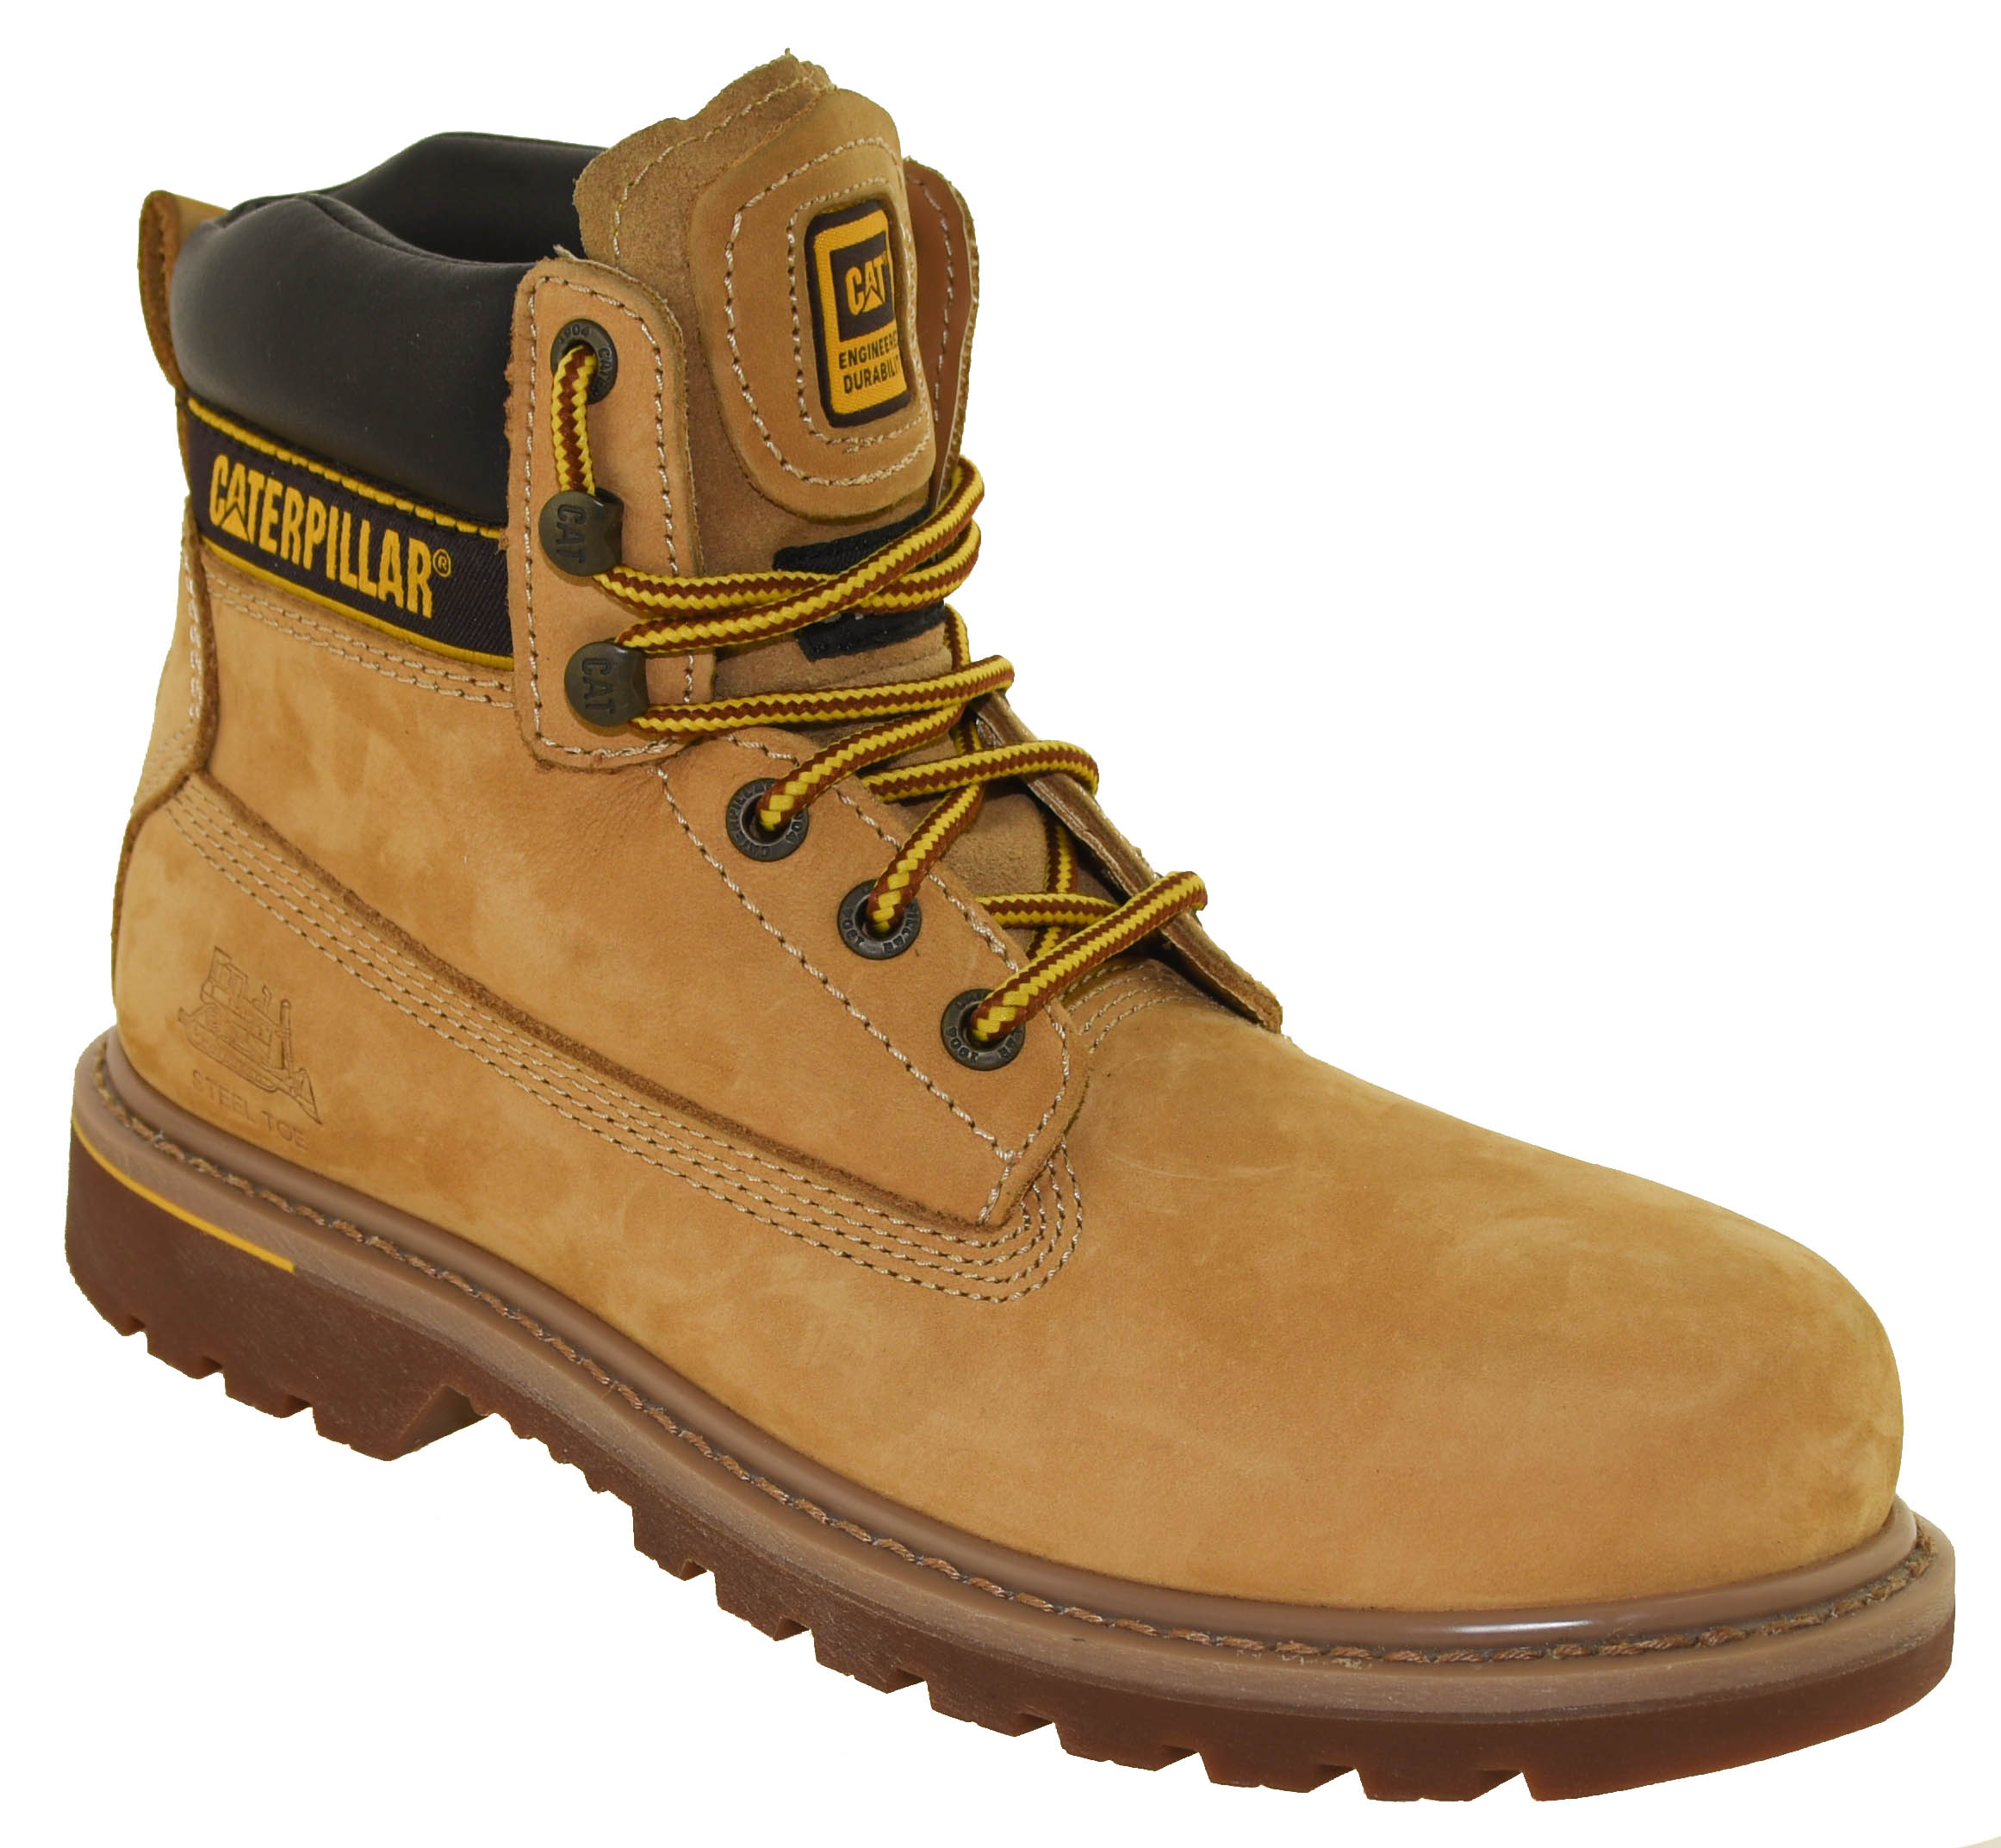 Caterpillar Men's Holton Steel Toe Work Boots Wheat P708215 | eBay